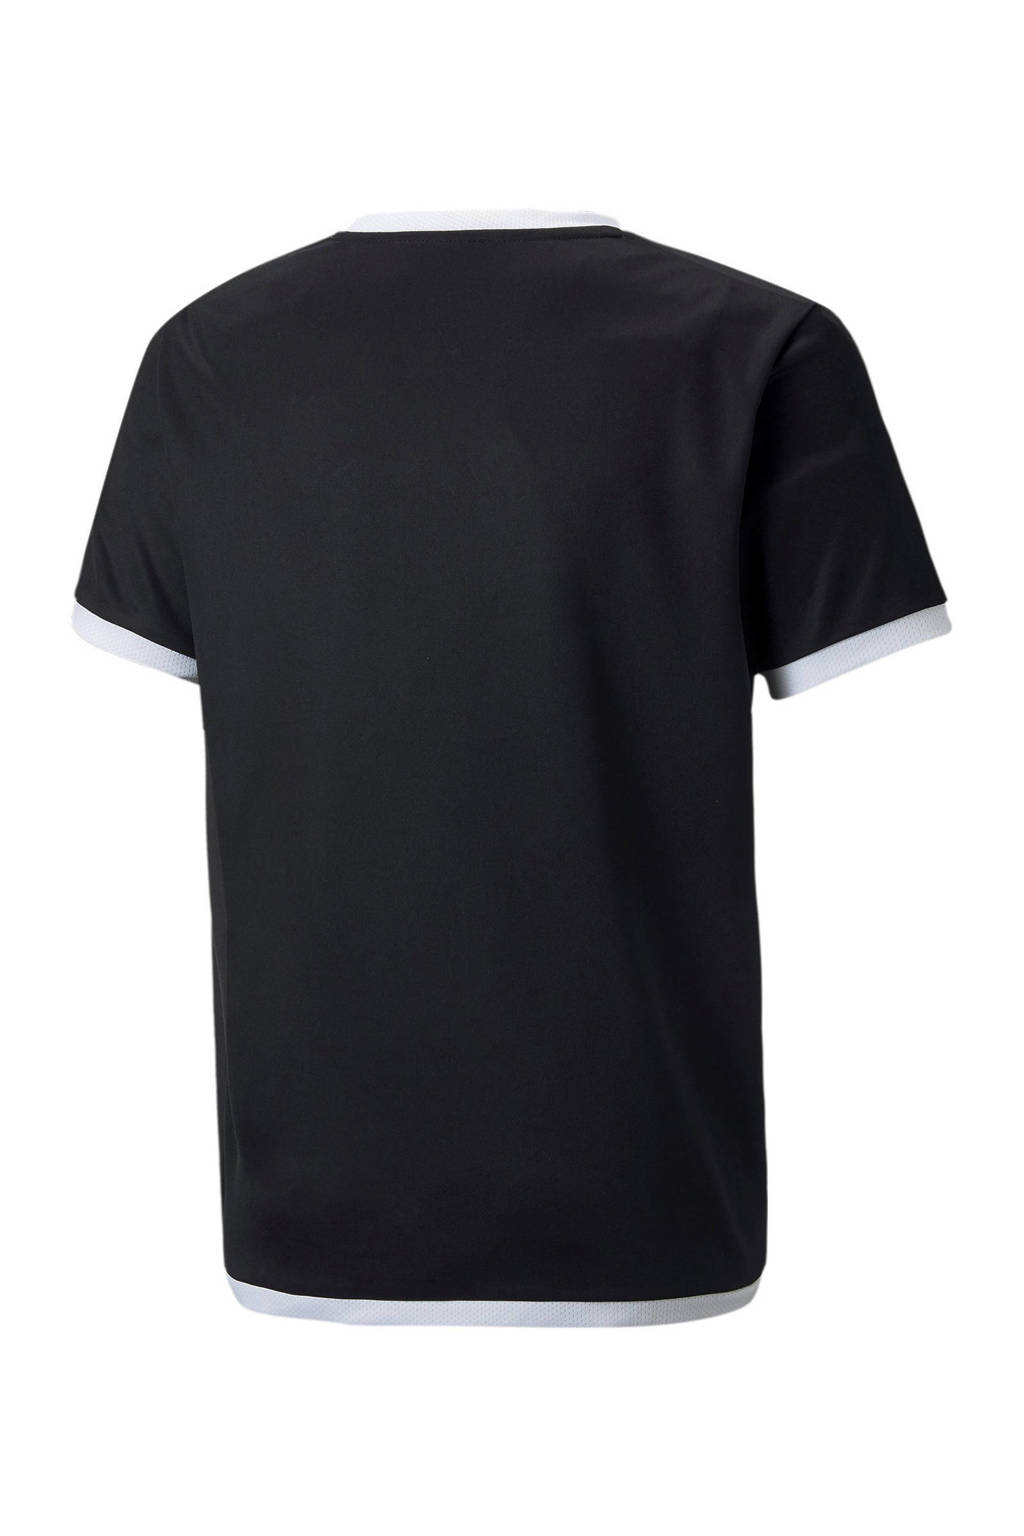 Glimp handicap fusie Puma Junior voetbalshirt zwart/wit | wehkamp